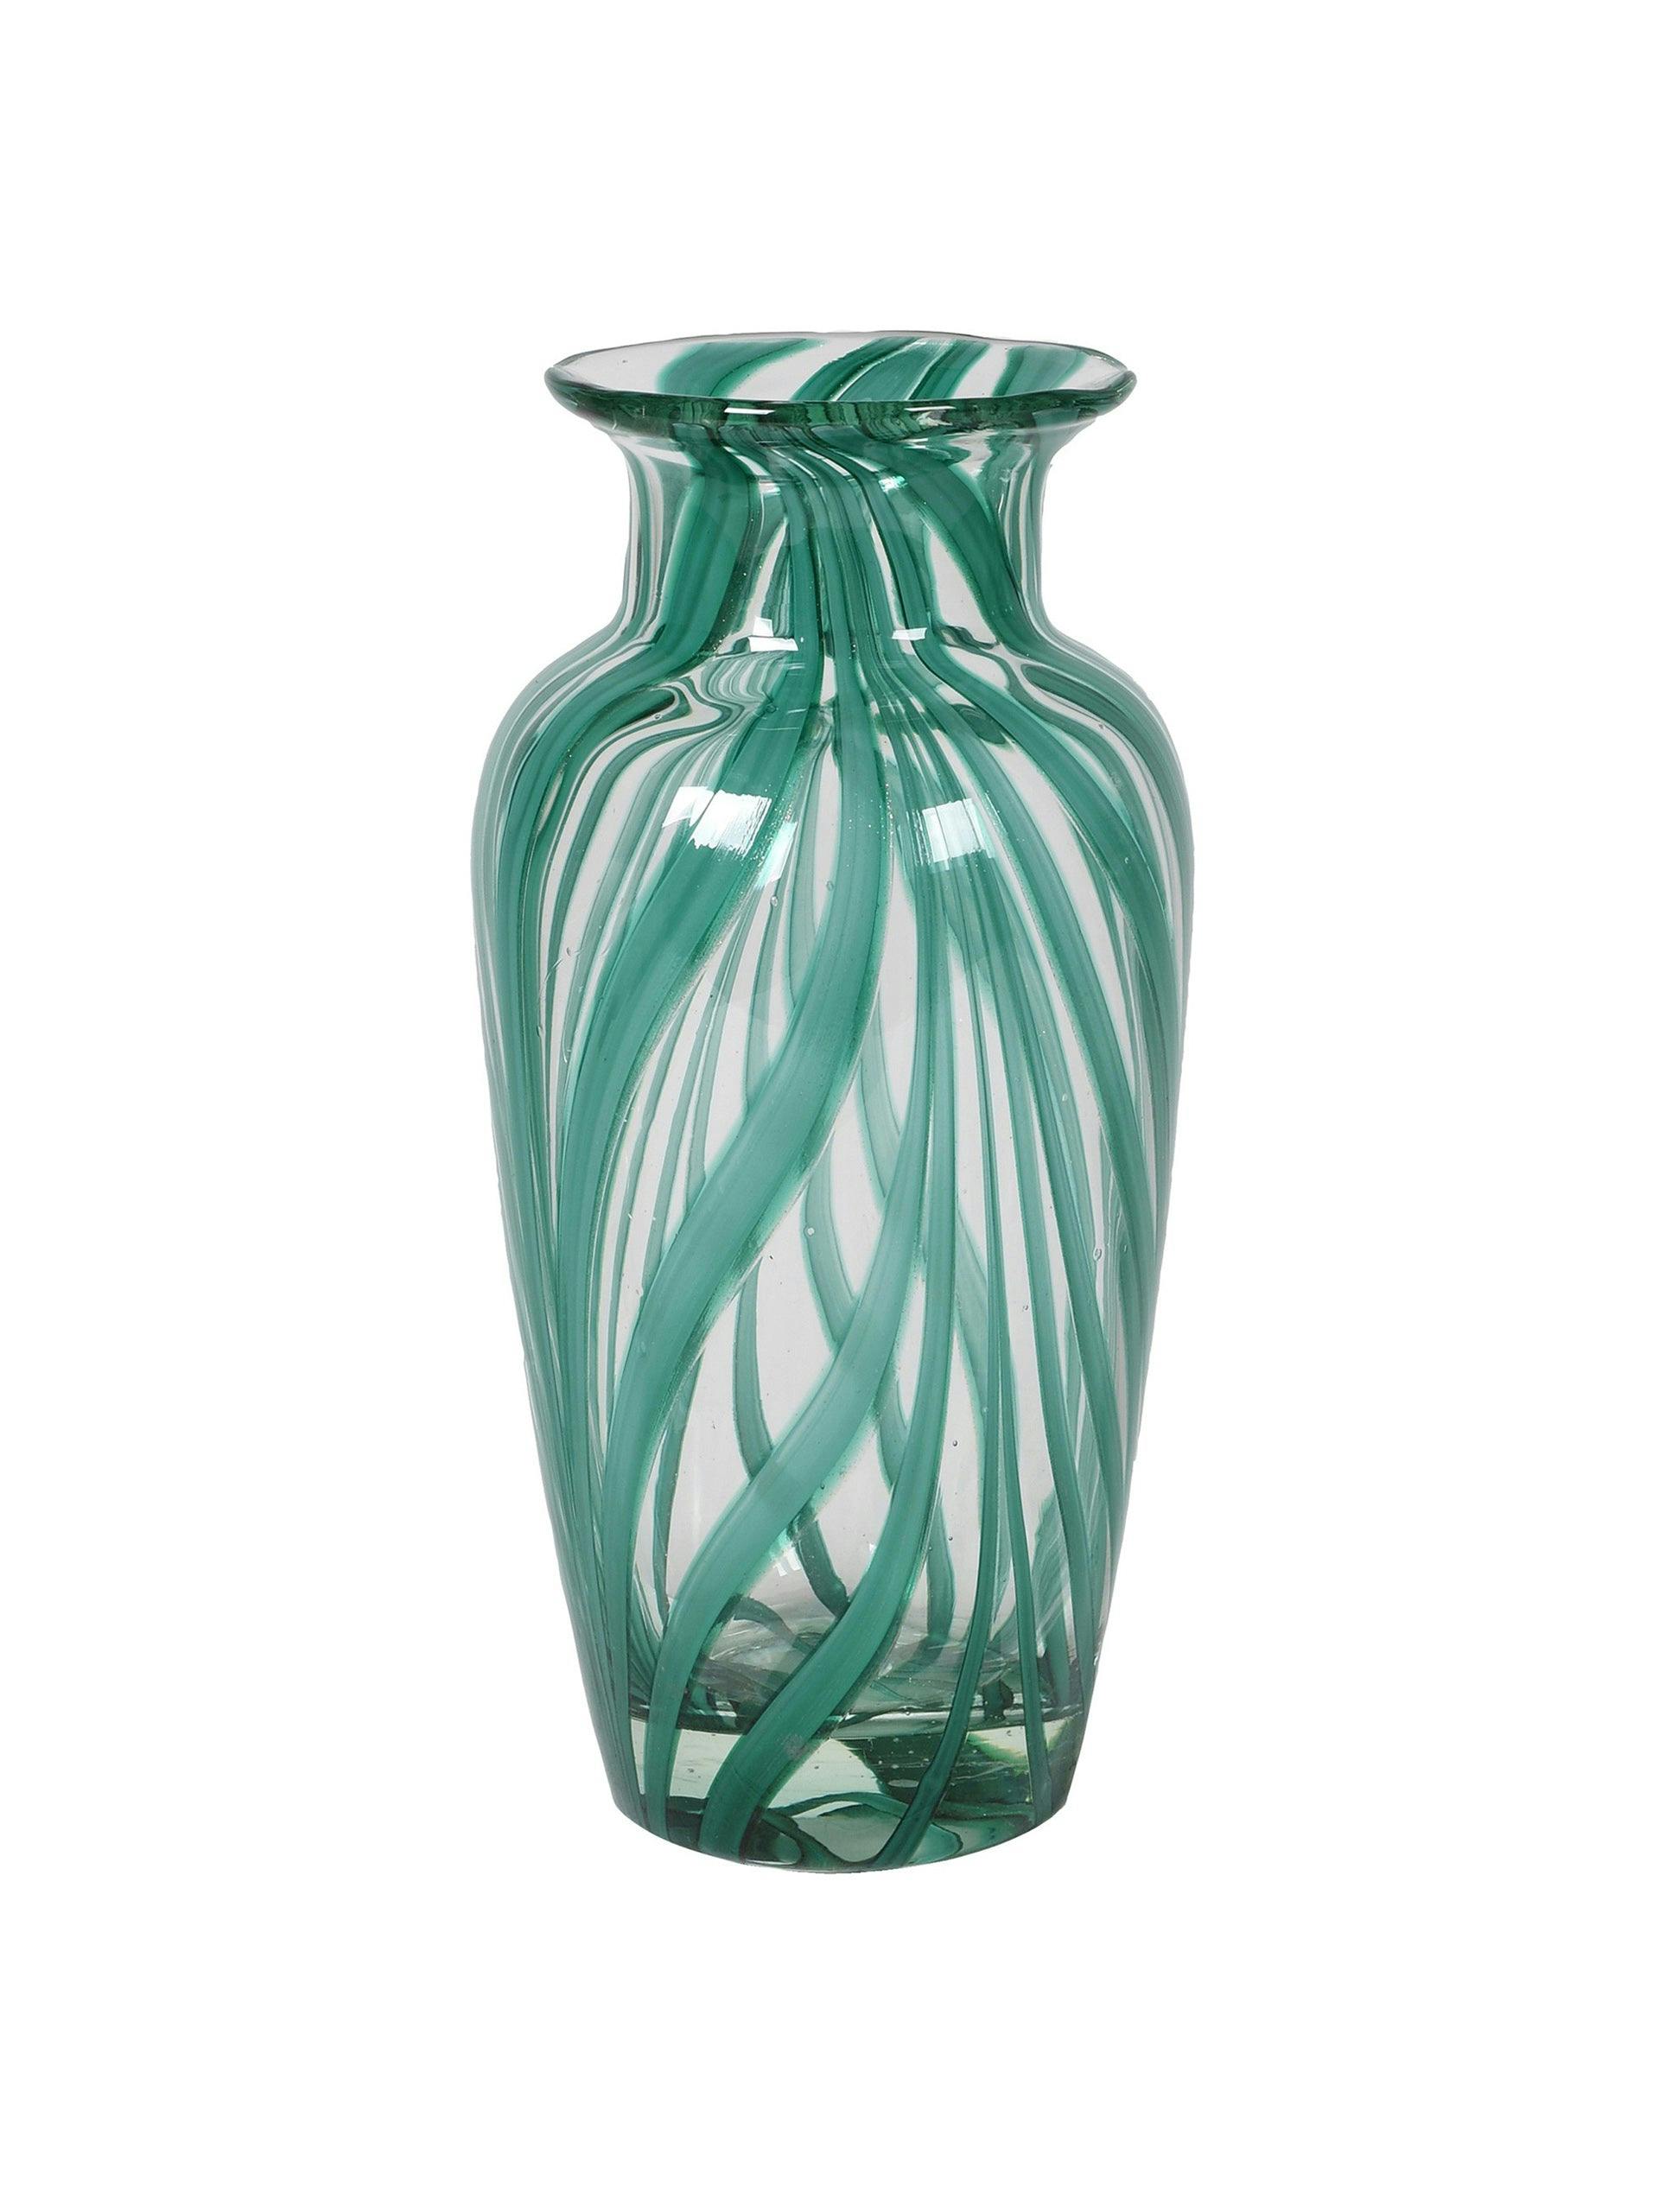 Emerald glass vase